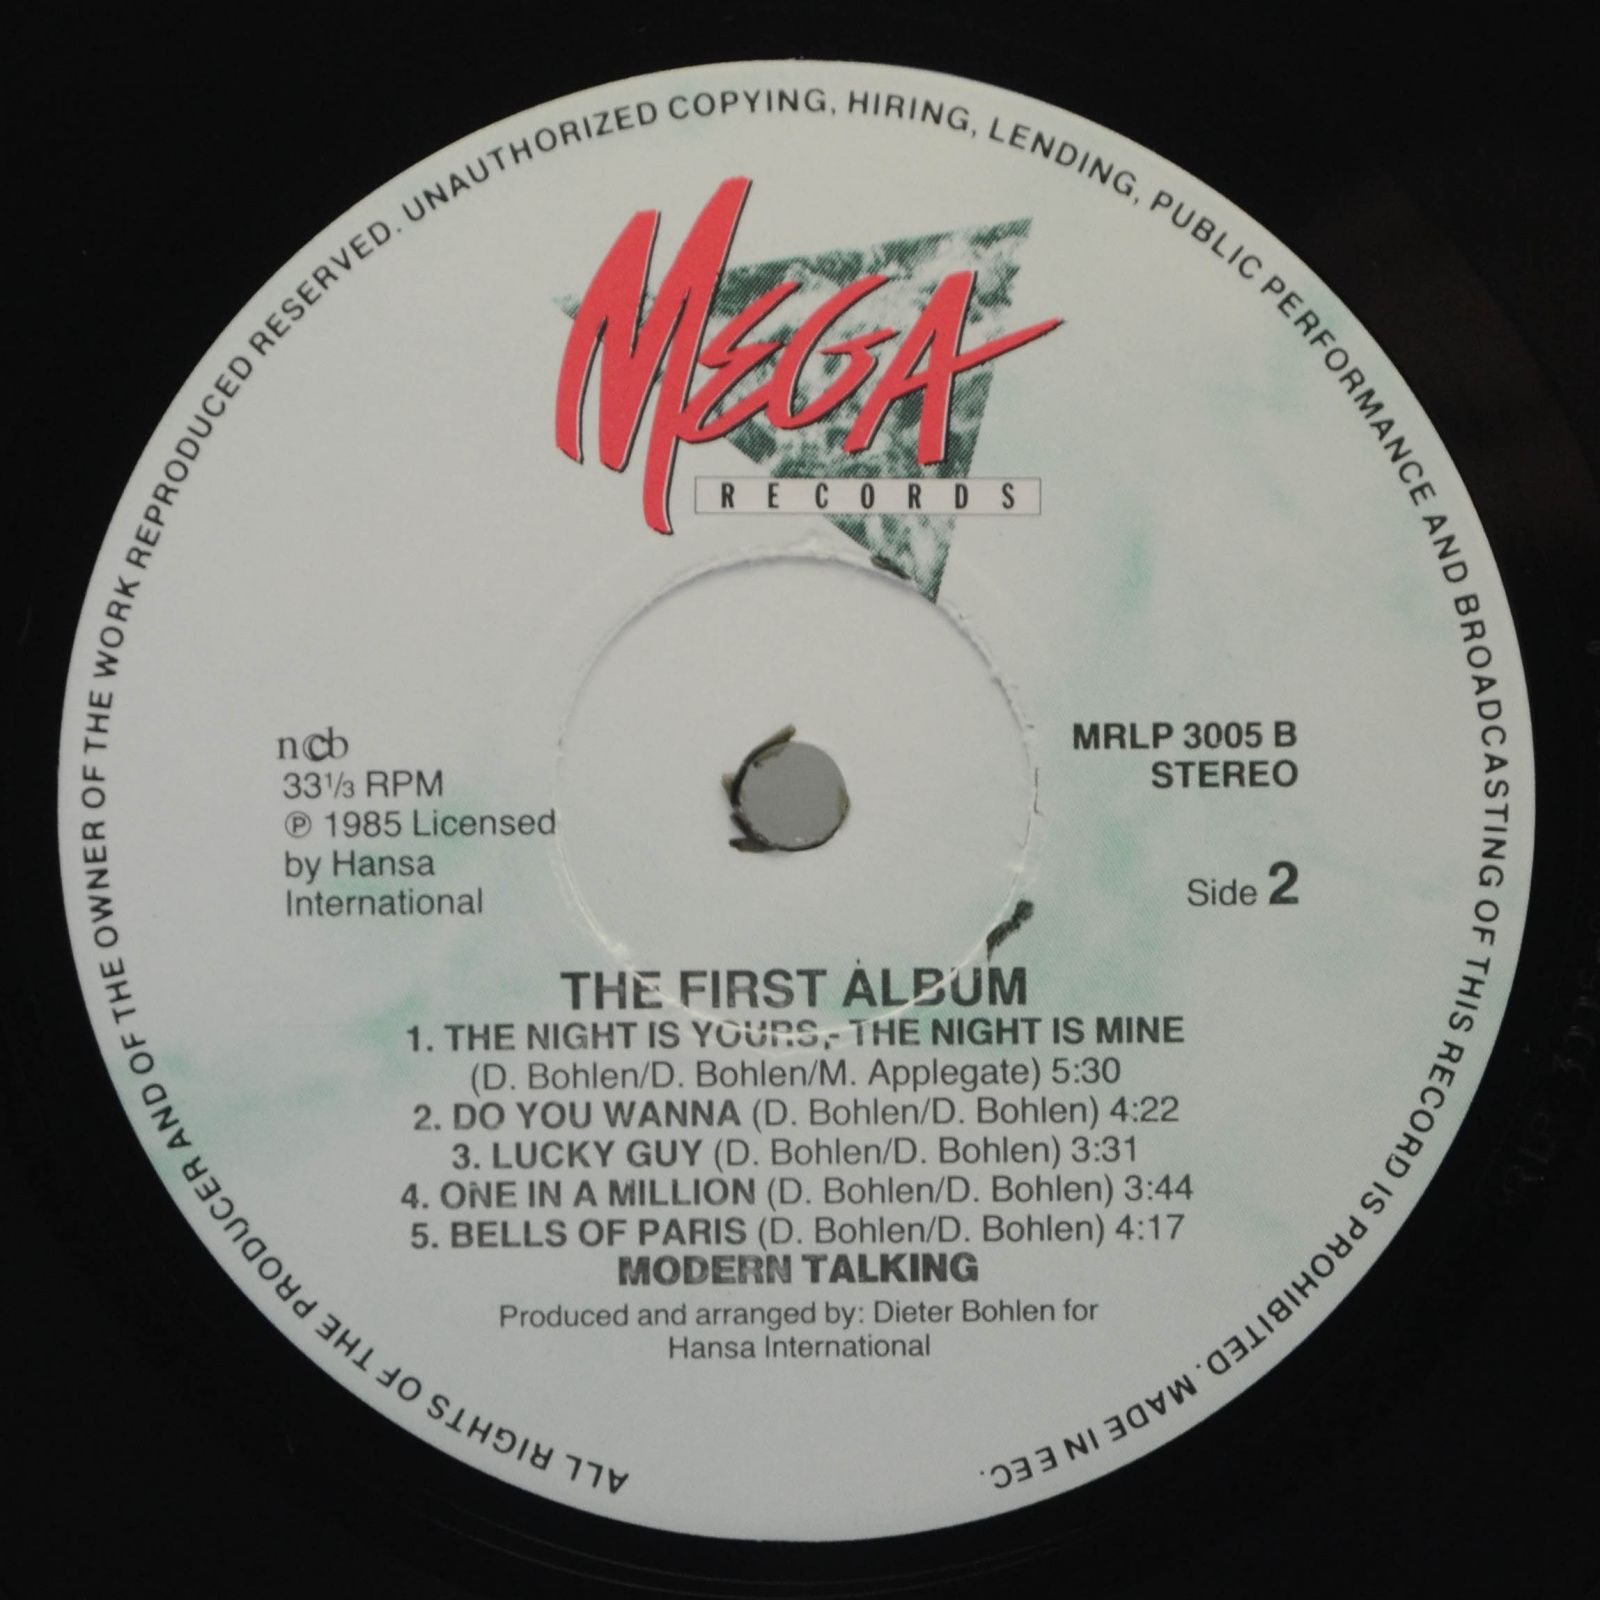 Modern Talking — The 1st Album, 1985